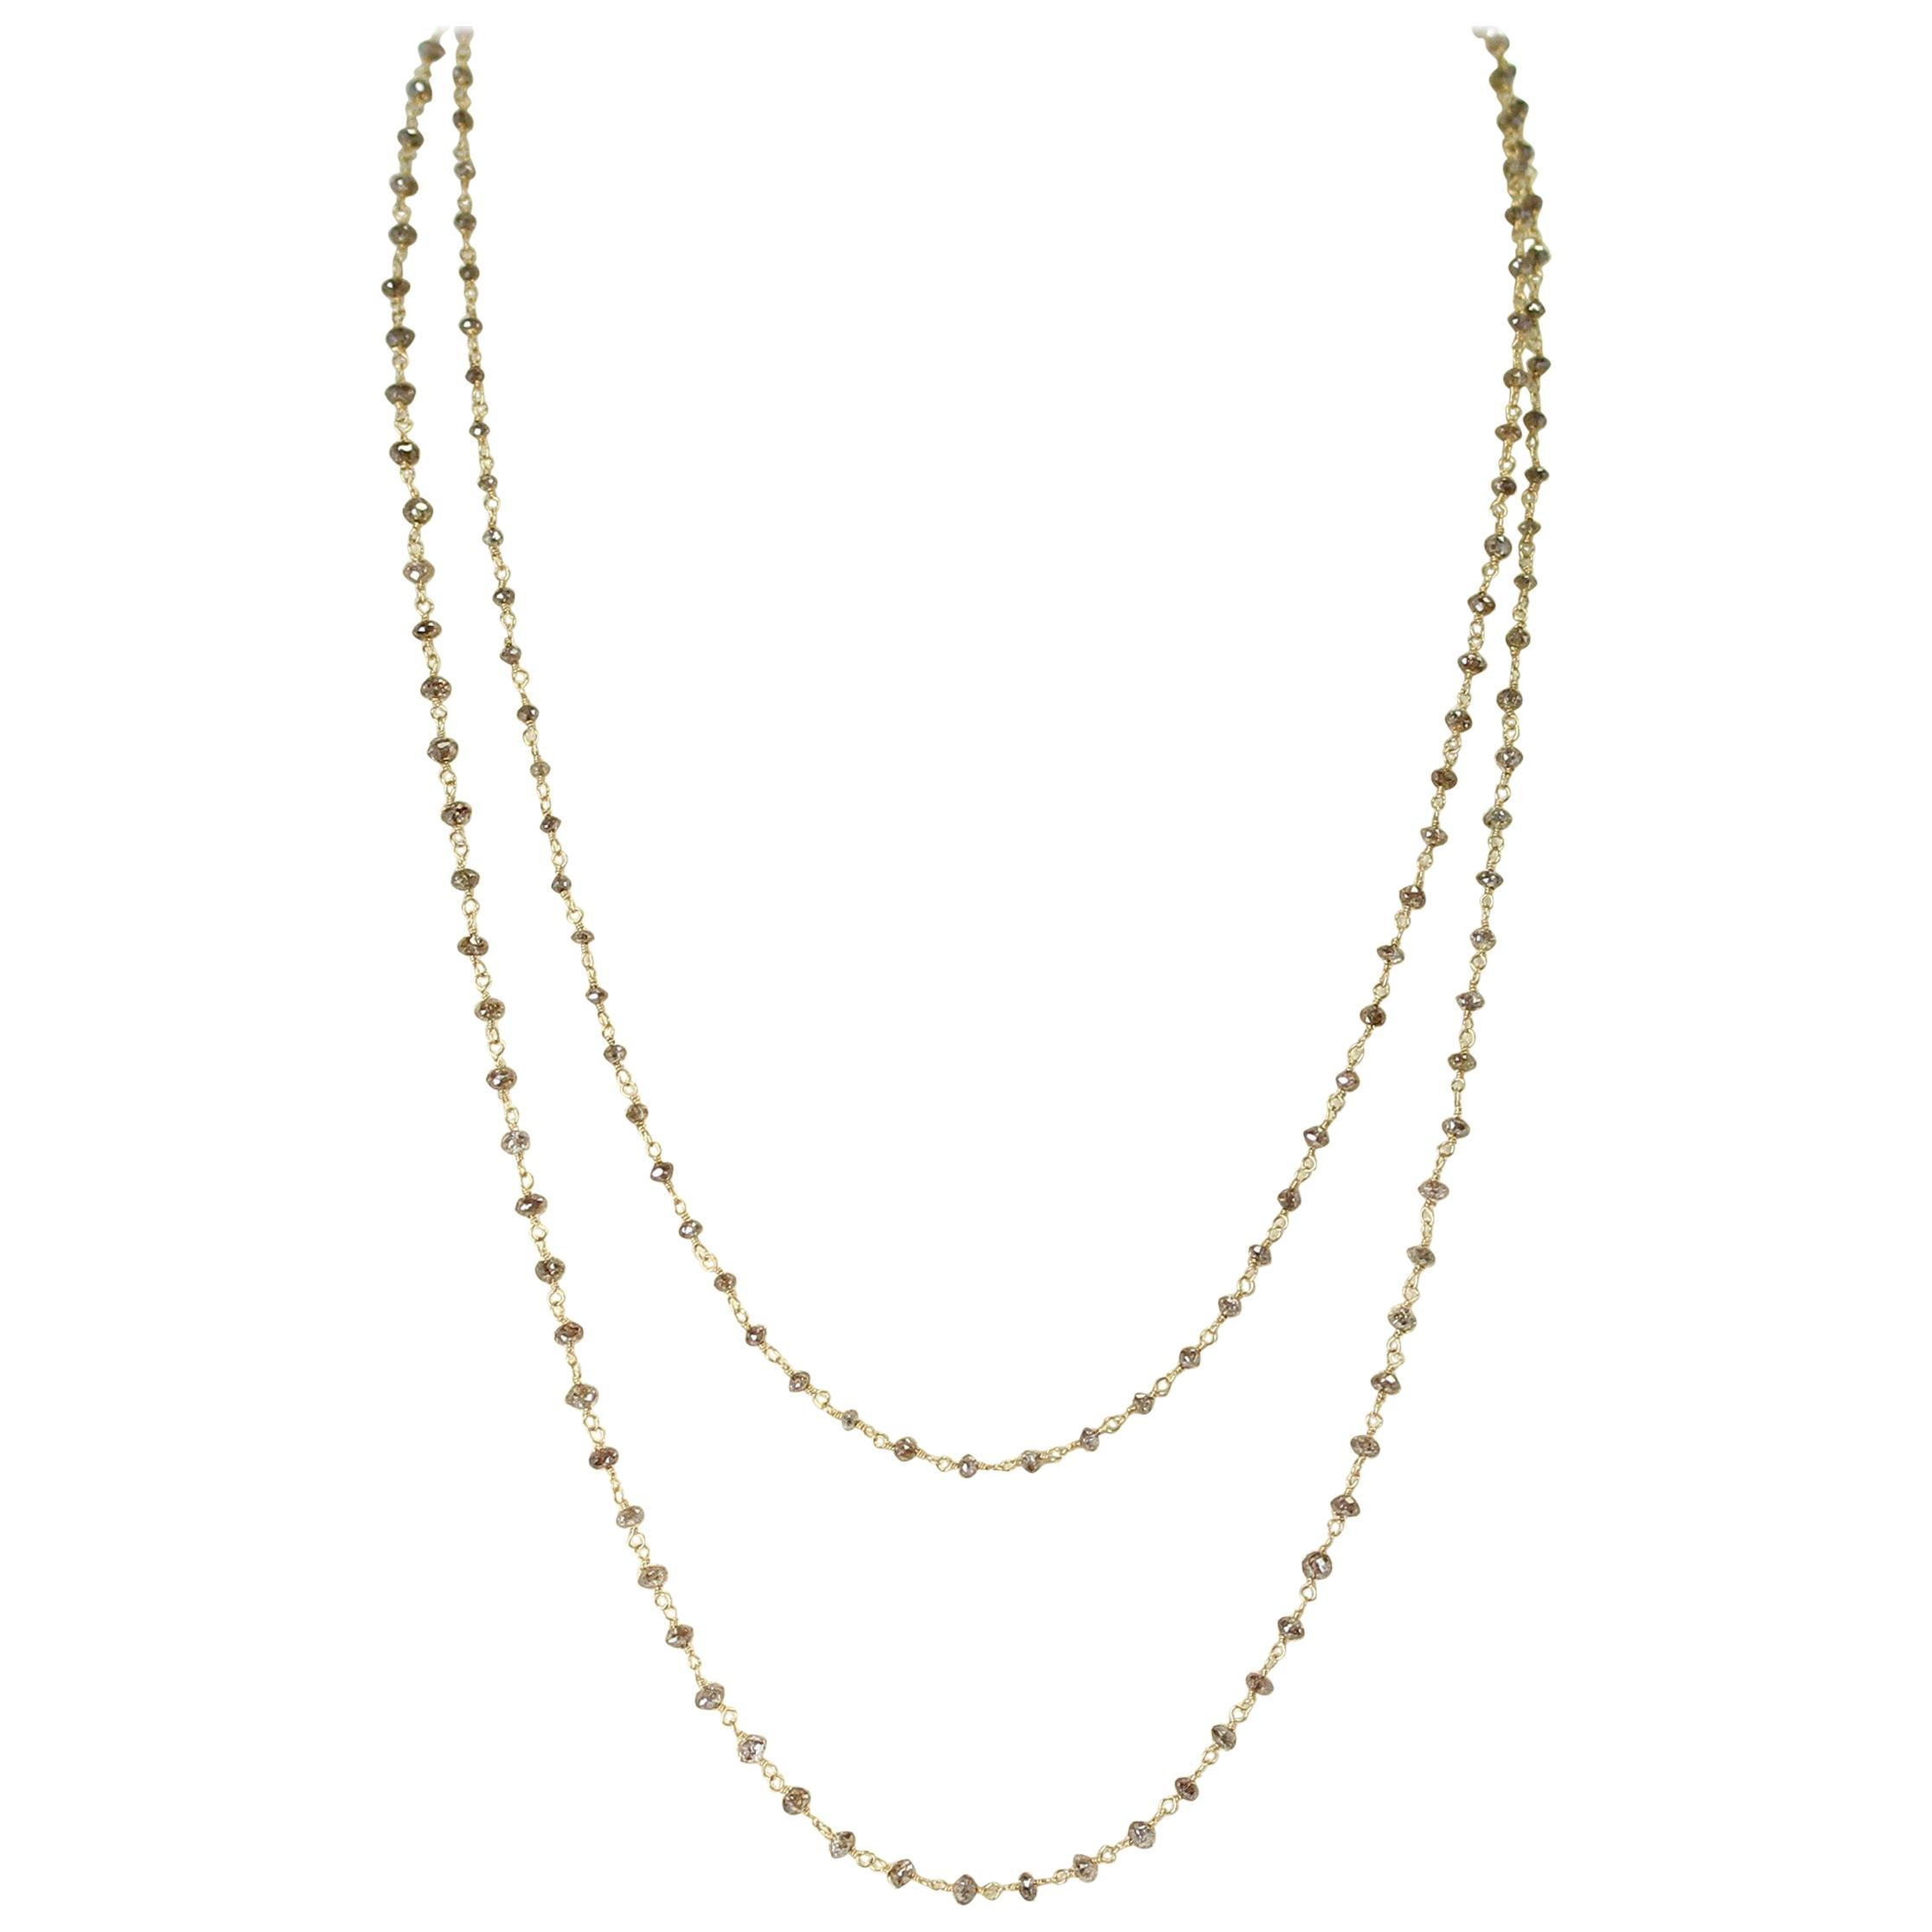 Genuine Champagne Diamond Beads Wire-Wrapped Necklace, 18 Karat Yellow